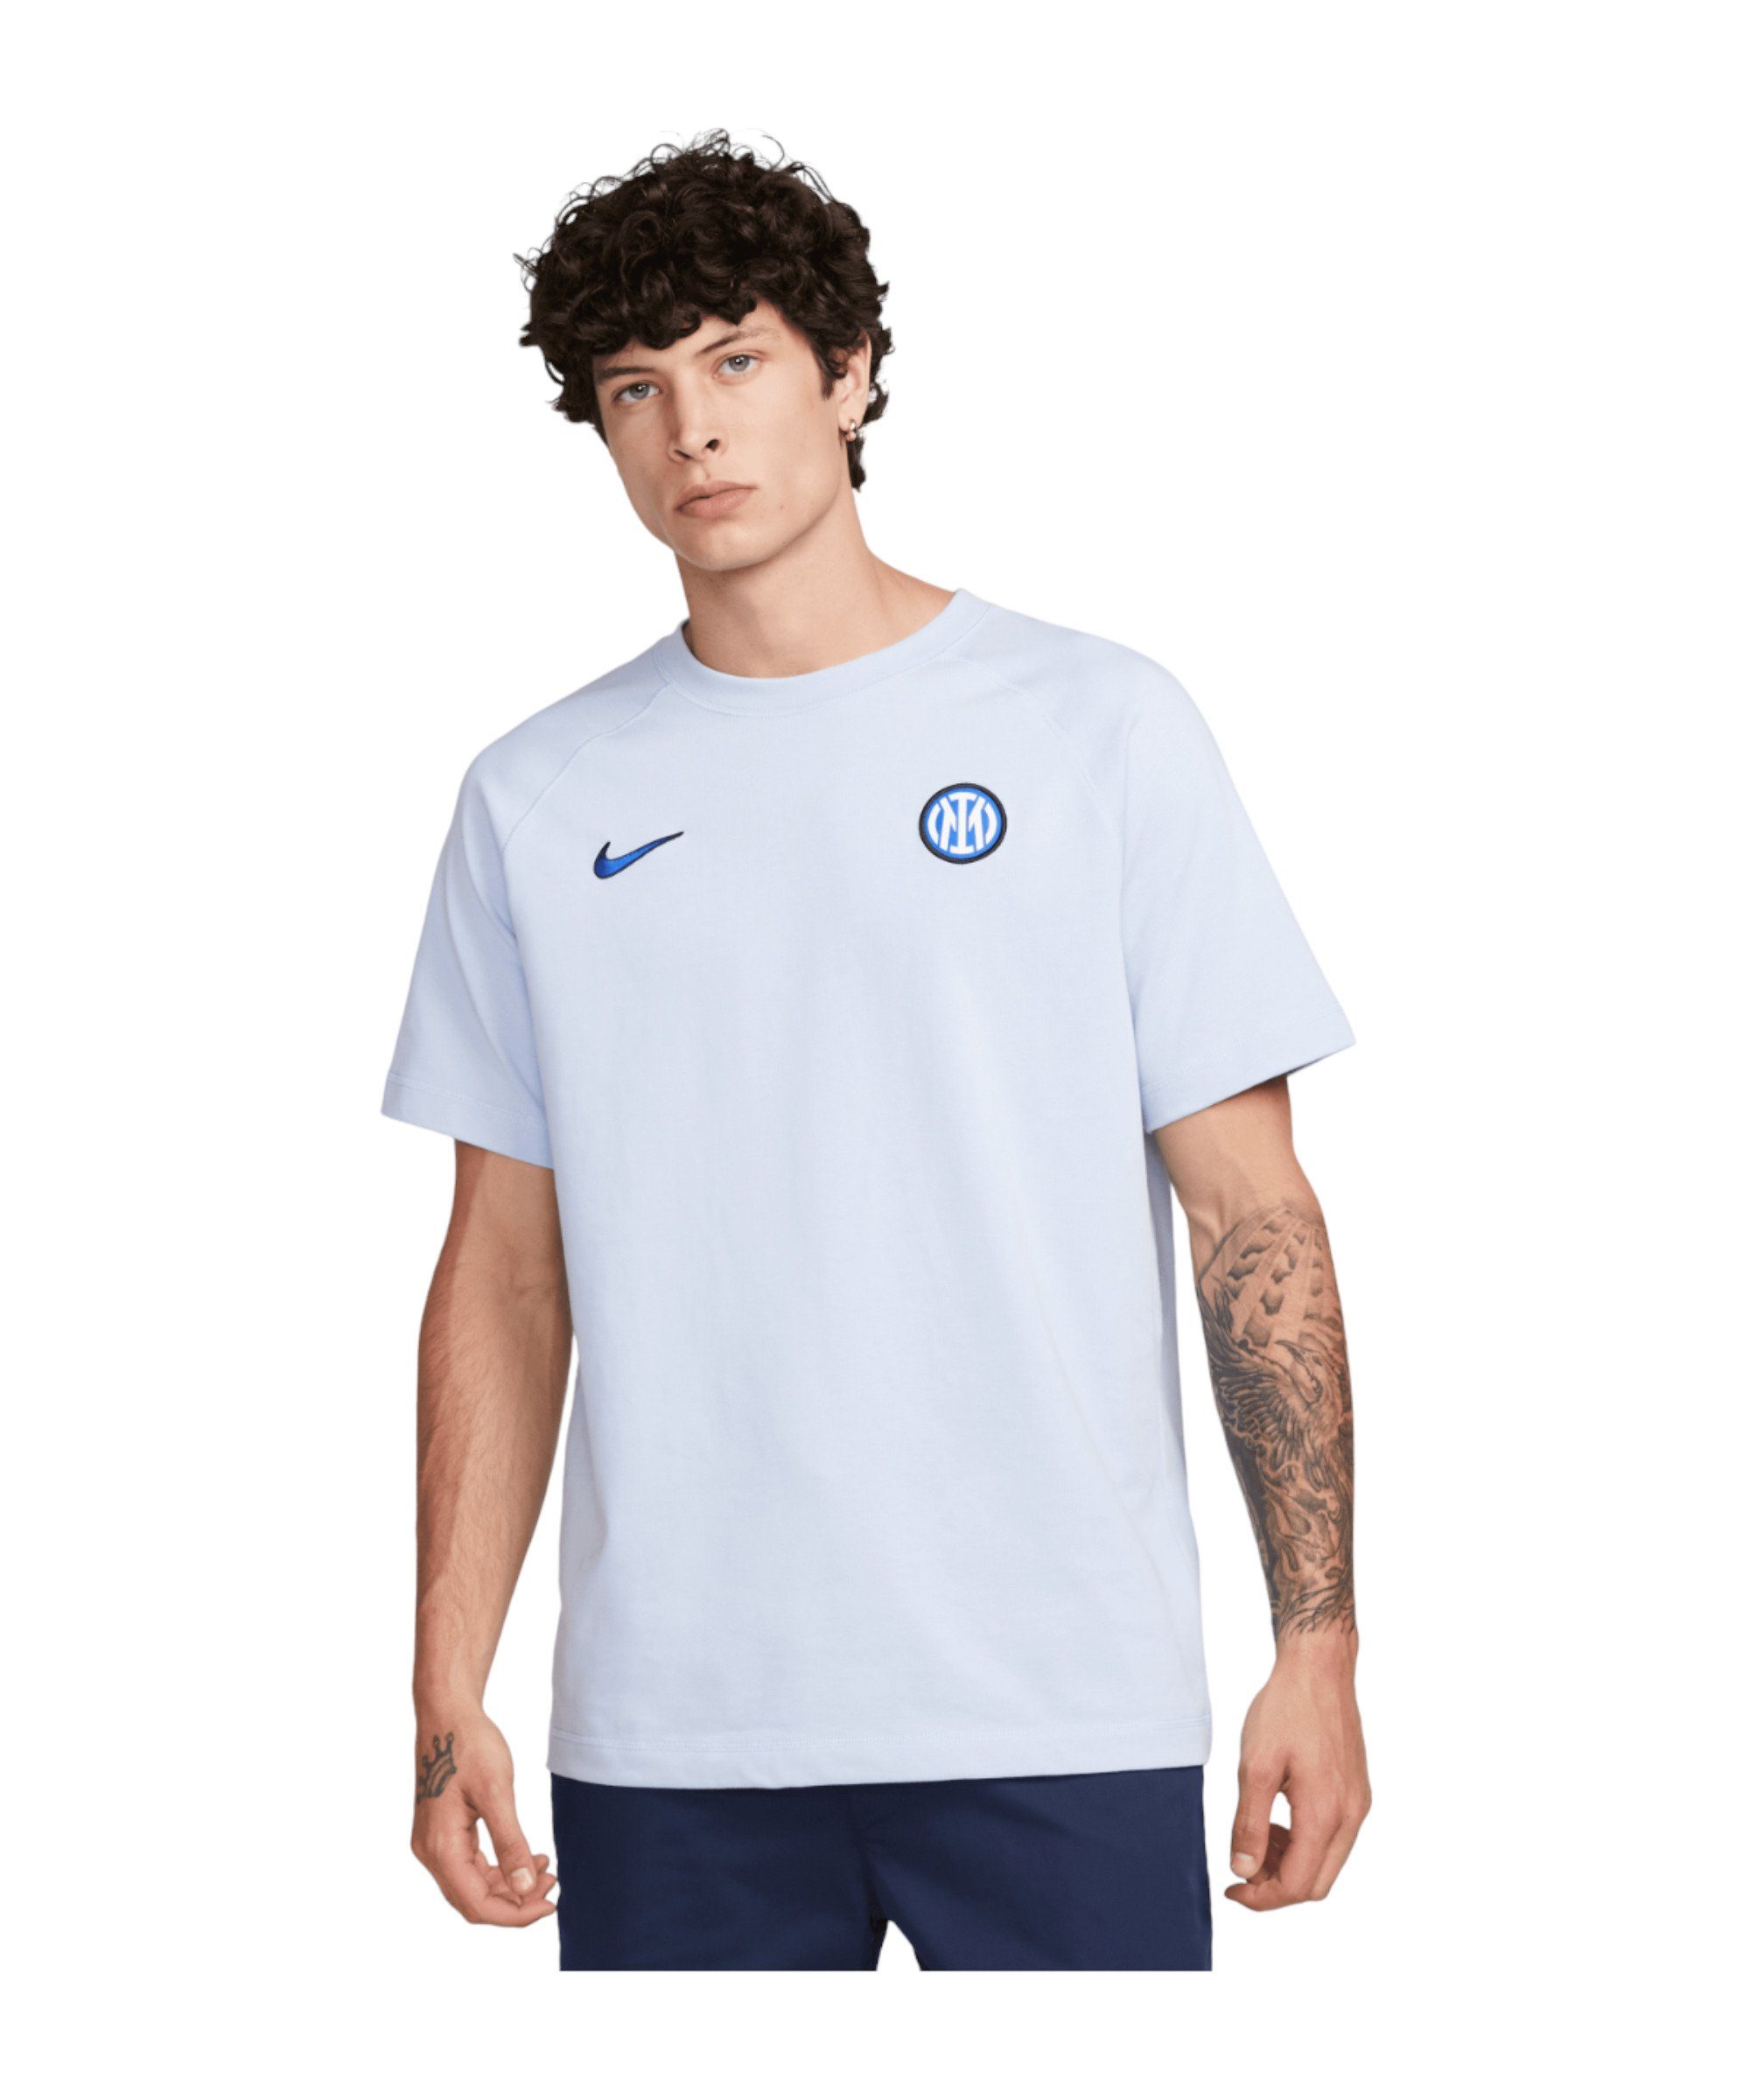 Inter Nike Travel Mailand T-Shirt default Hell T-Shirt